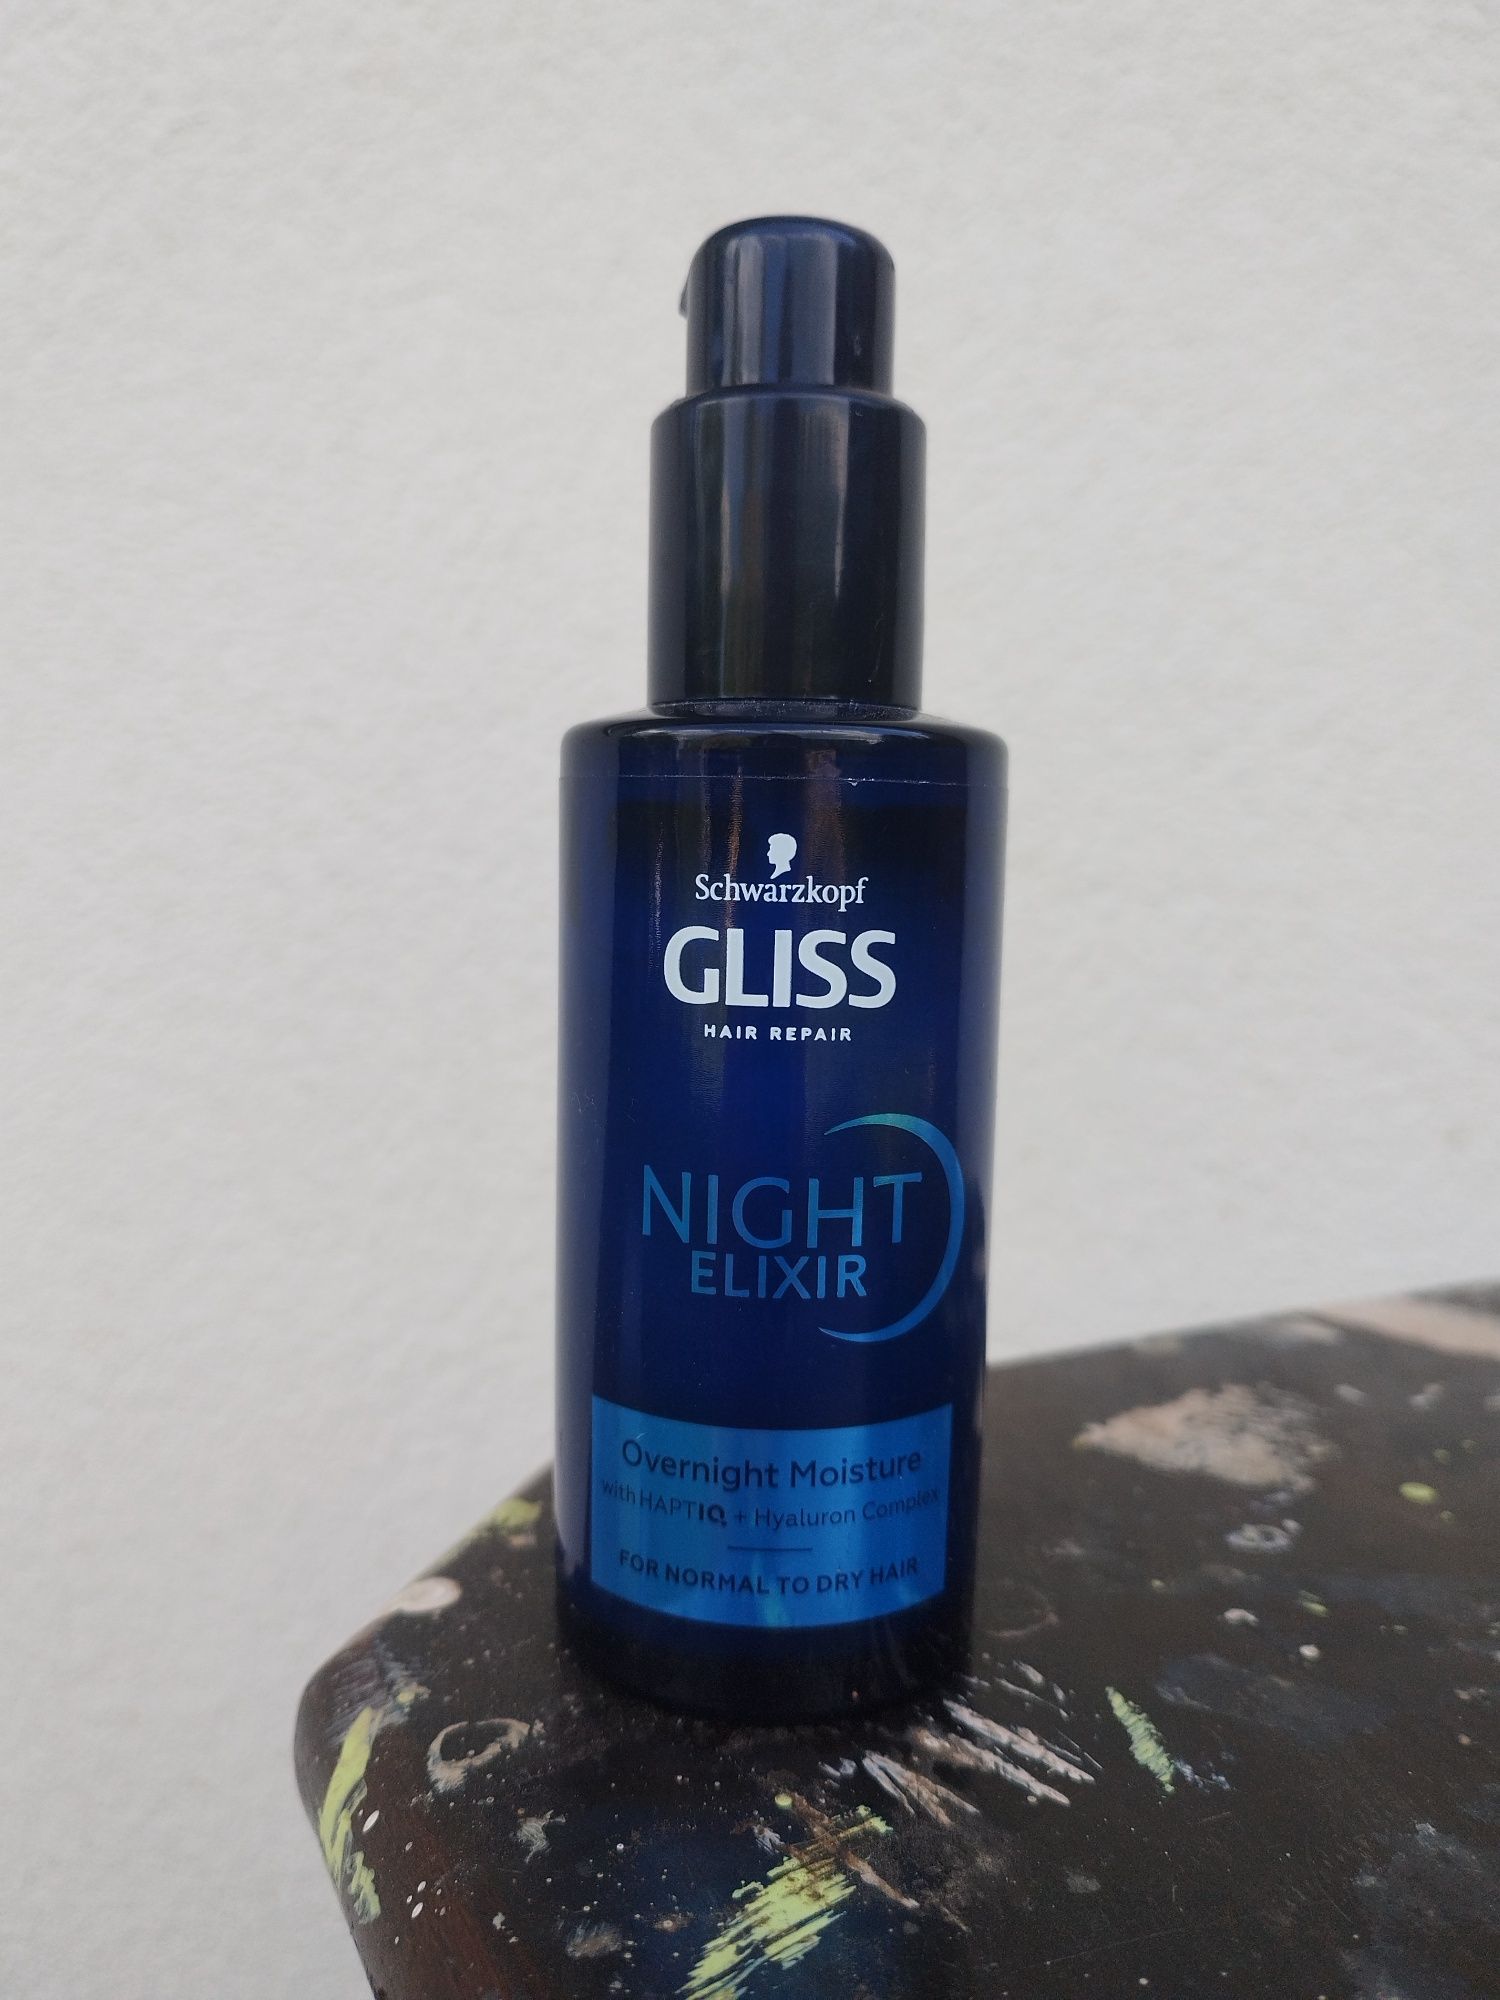 Schwarzkopf Gliss Hair Repair Night Elixir kuracja